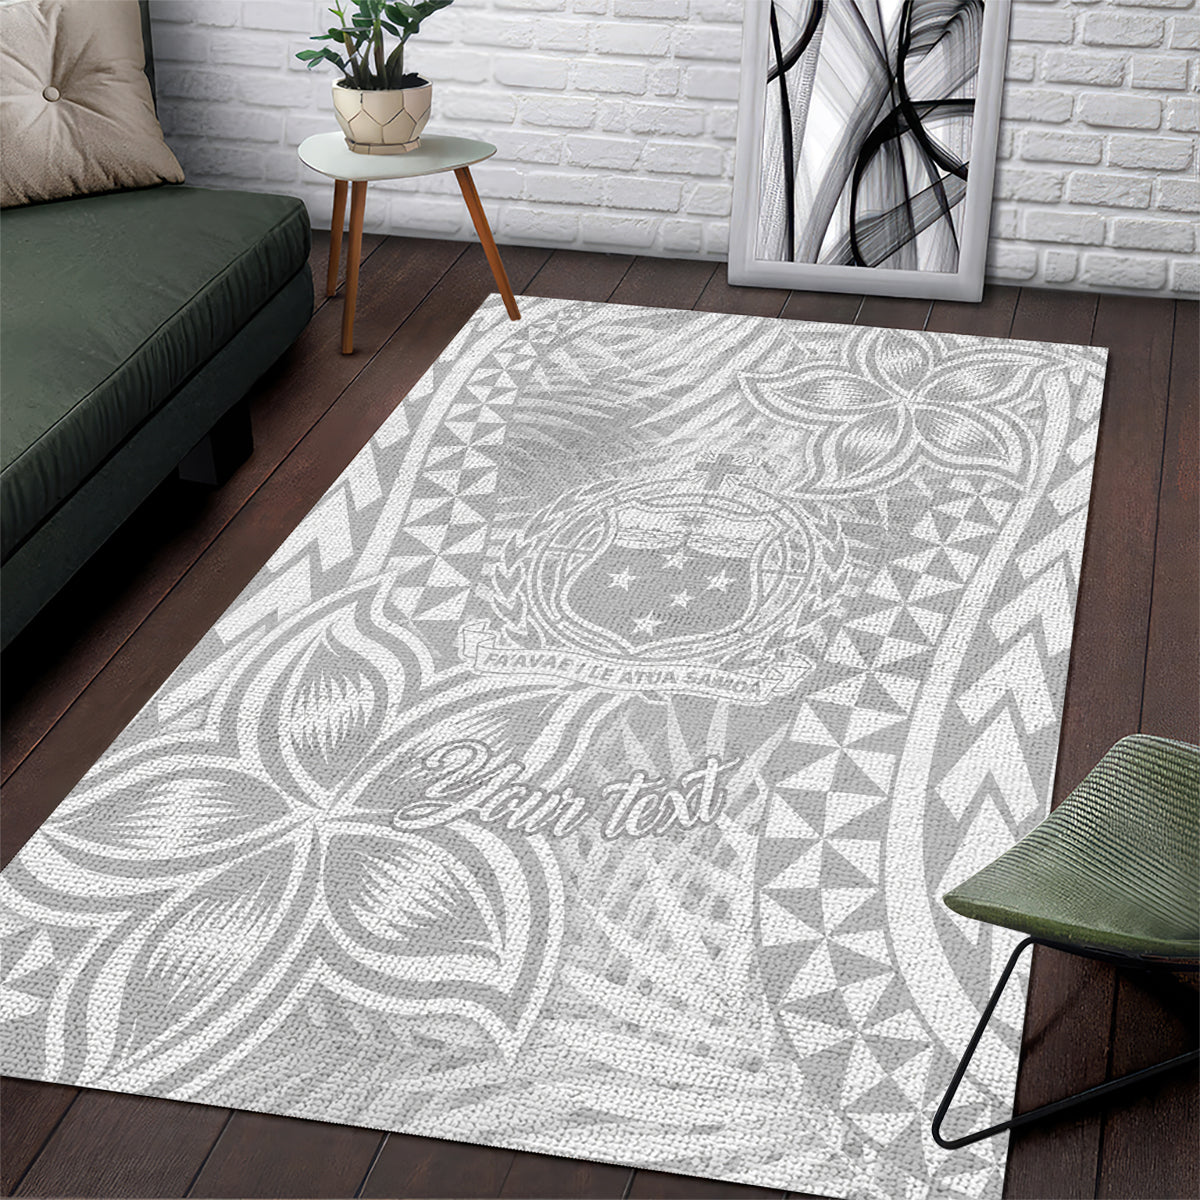 personalised-samoa-lotu-tamait-area-rug-tropical-plant-white-sunday-with-polynesia-pattern